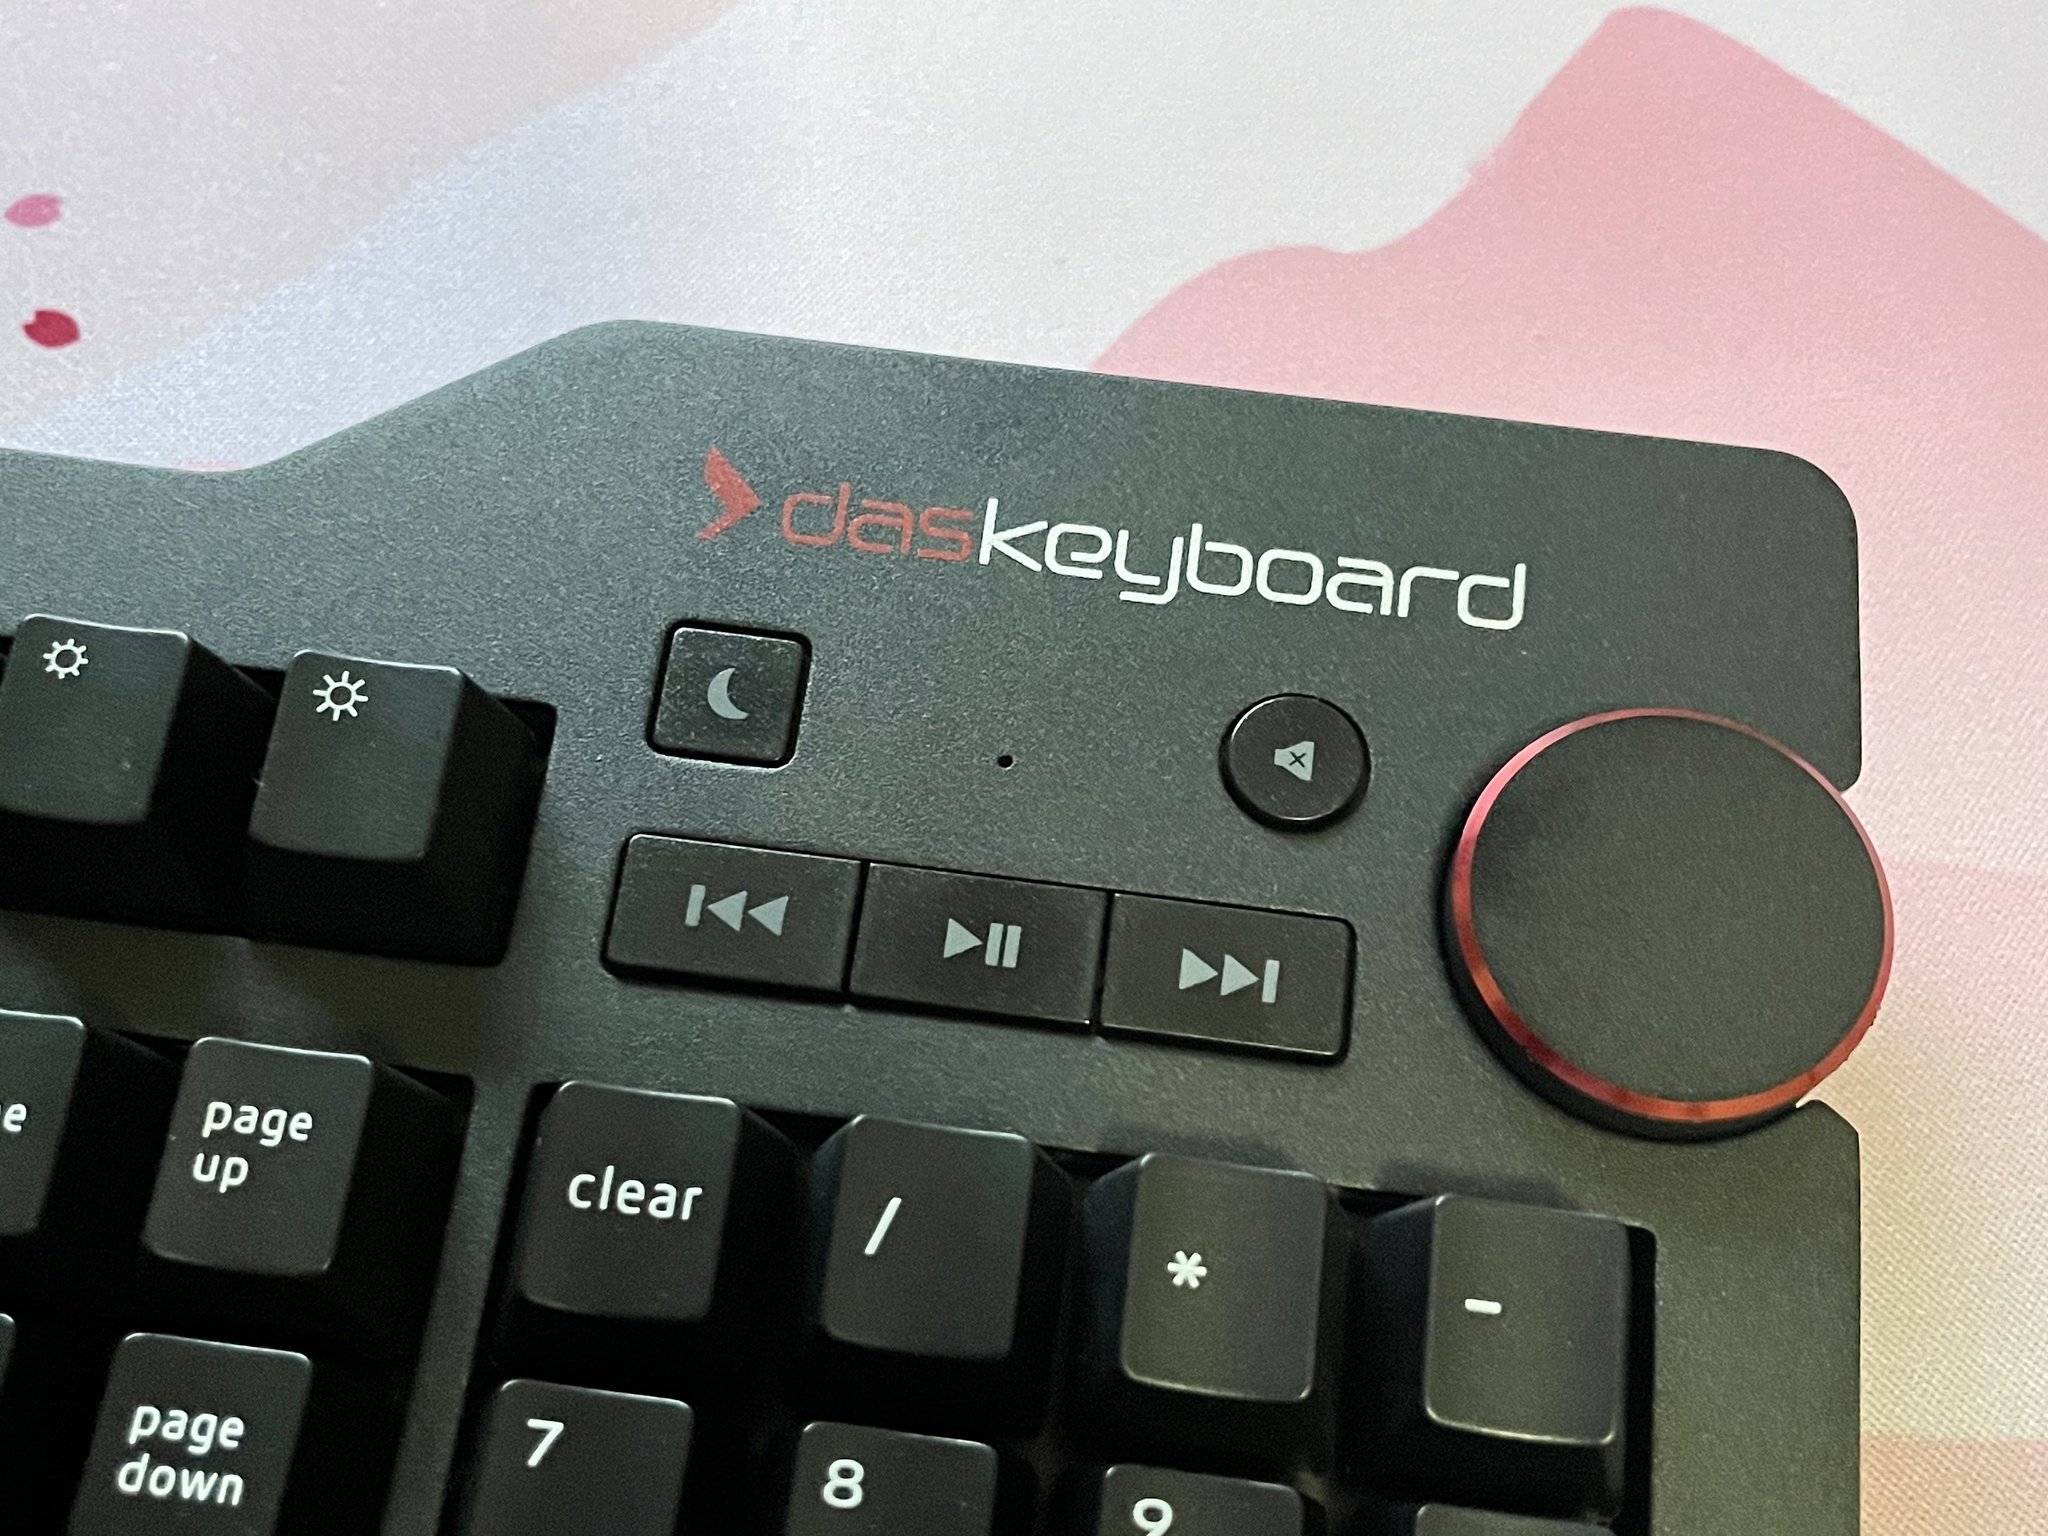 Das Keyboard 4 Professional Shortcut Buttons